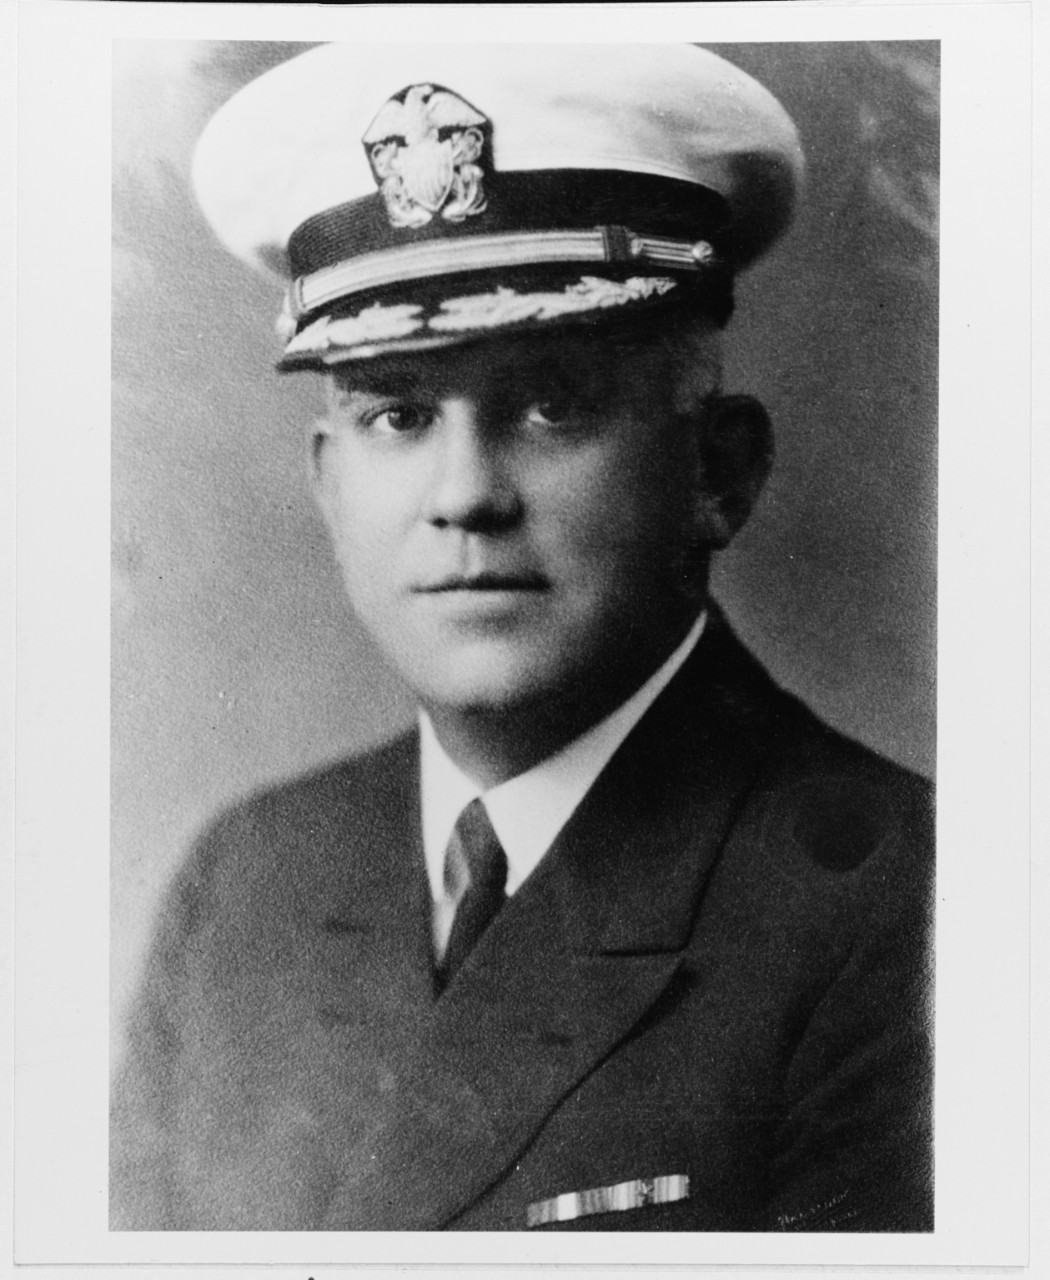 Captain Gordon W. Haines, USN